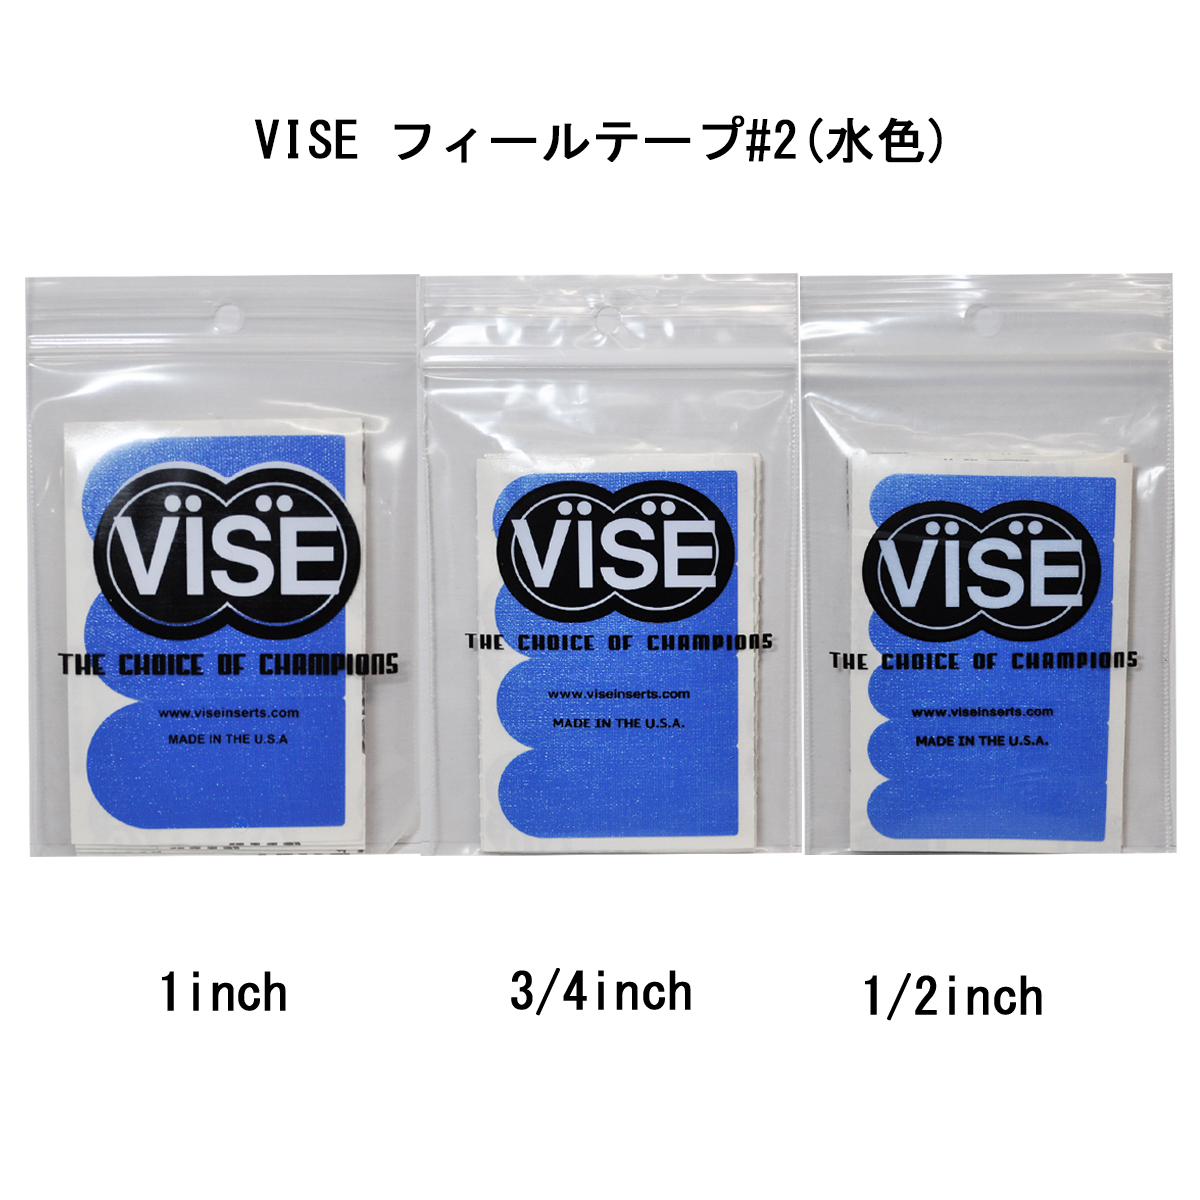 VISE フィールテープ#2(水色)